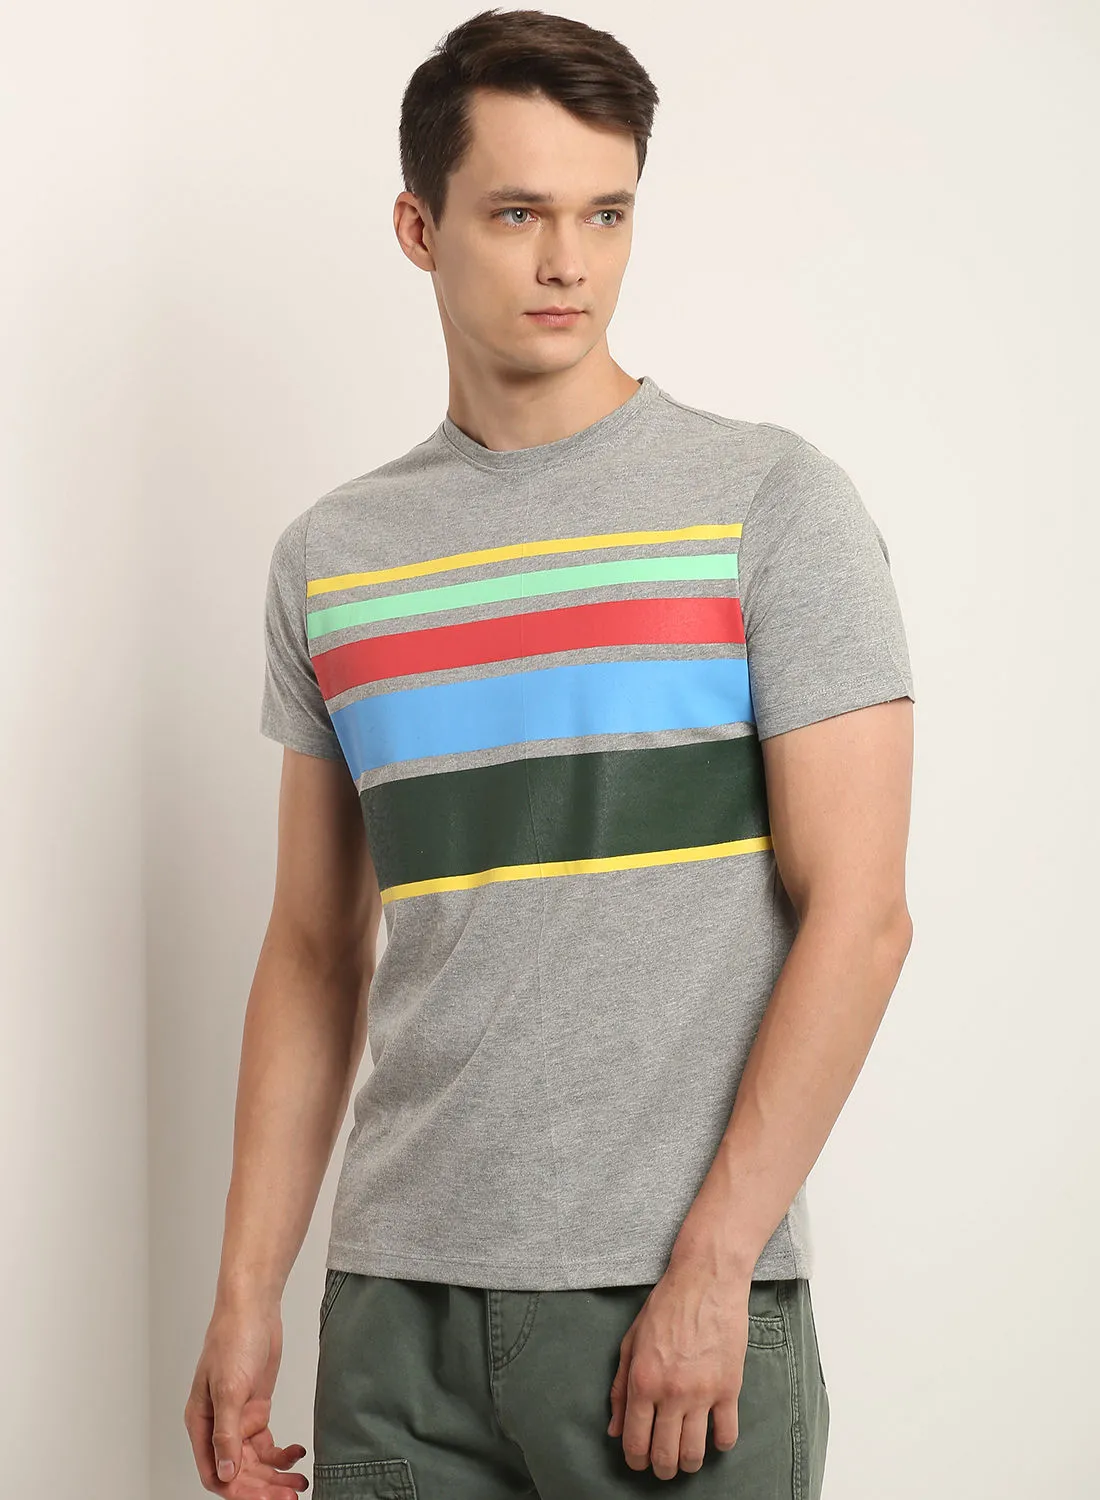 QUWA Men casual slim fit colorful stripes graphic printed T-shirt Light Grey Melange